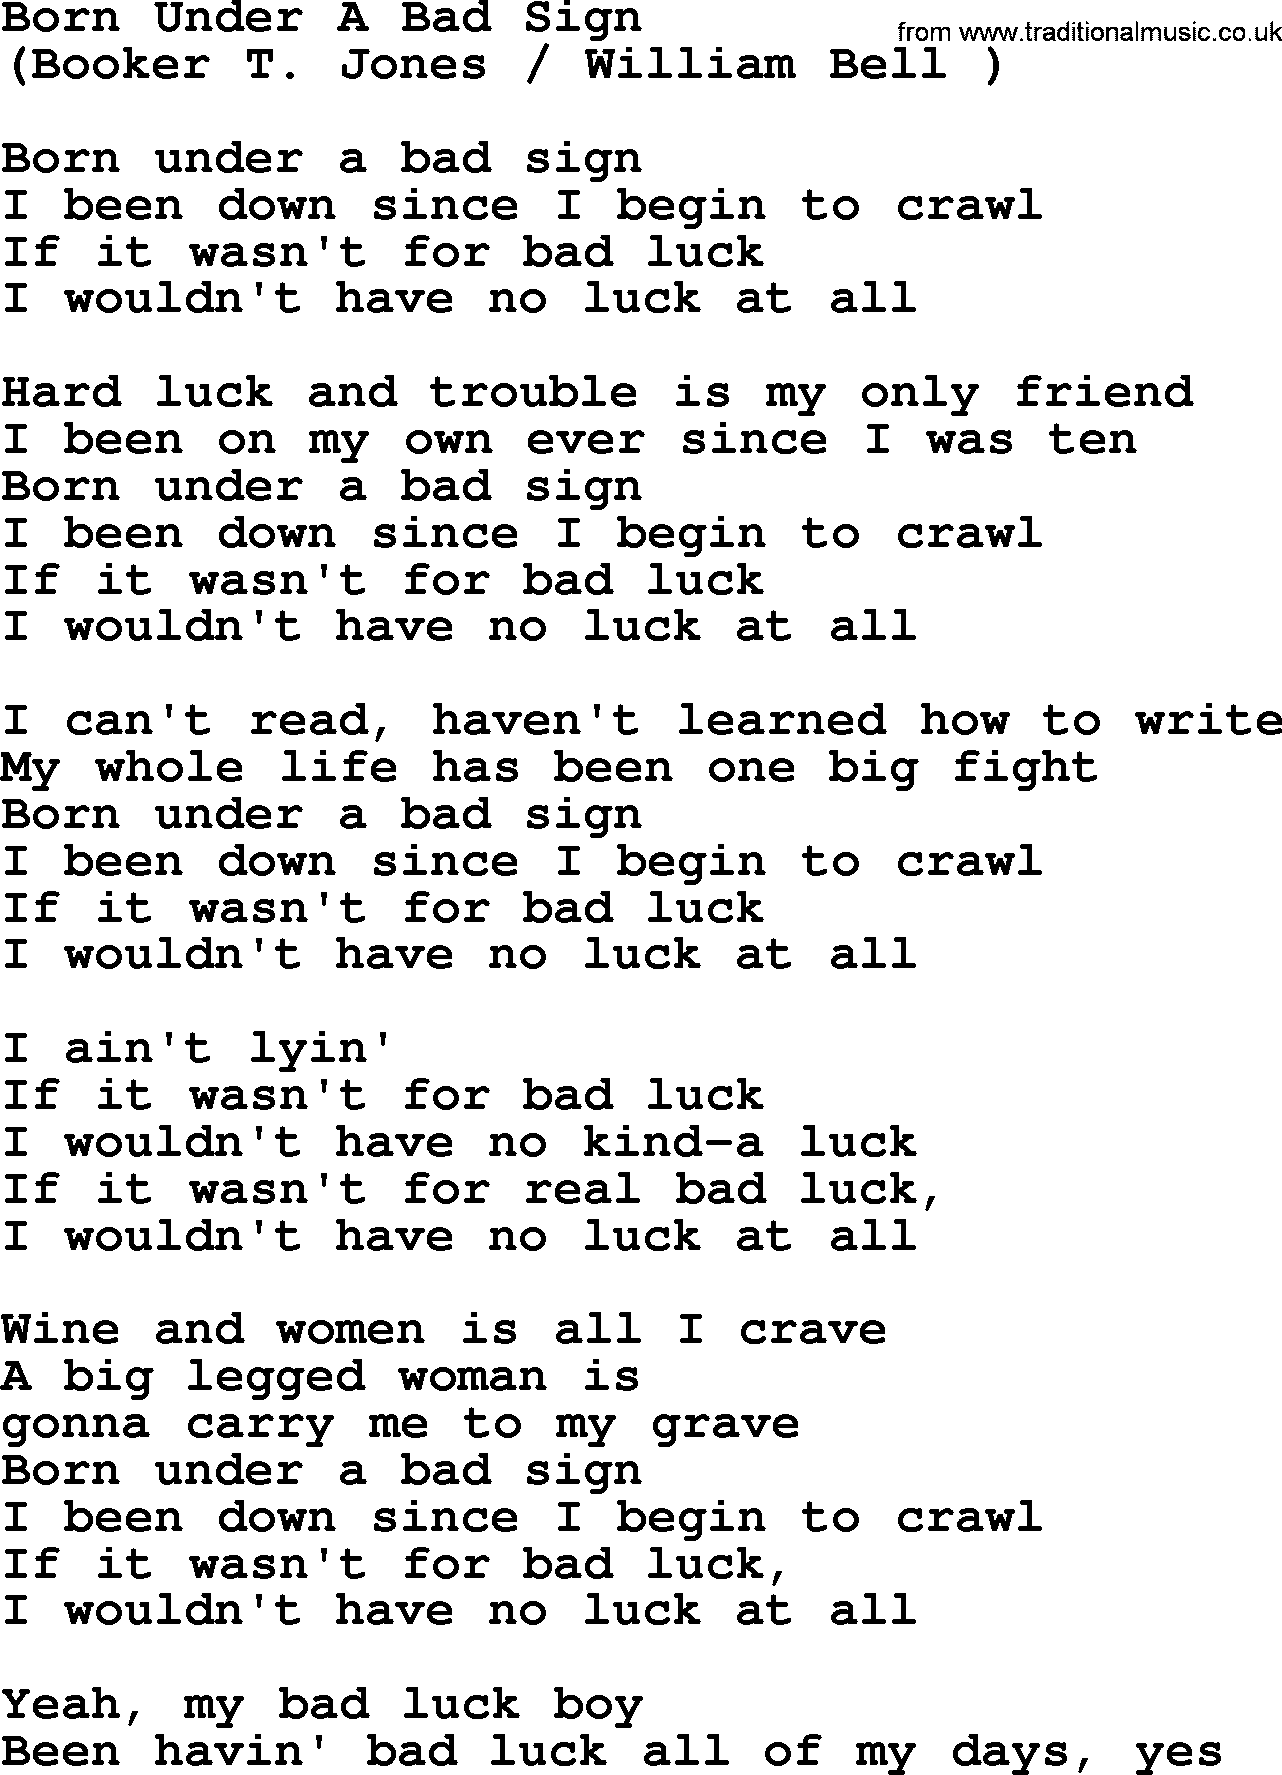 The Byrds song Born Under A Bad Sign, lyrics